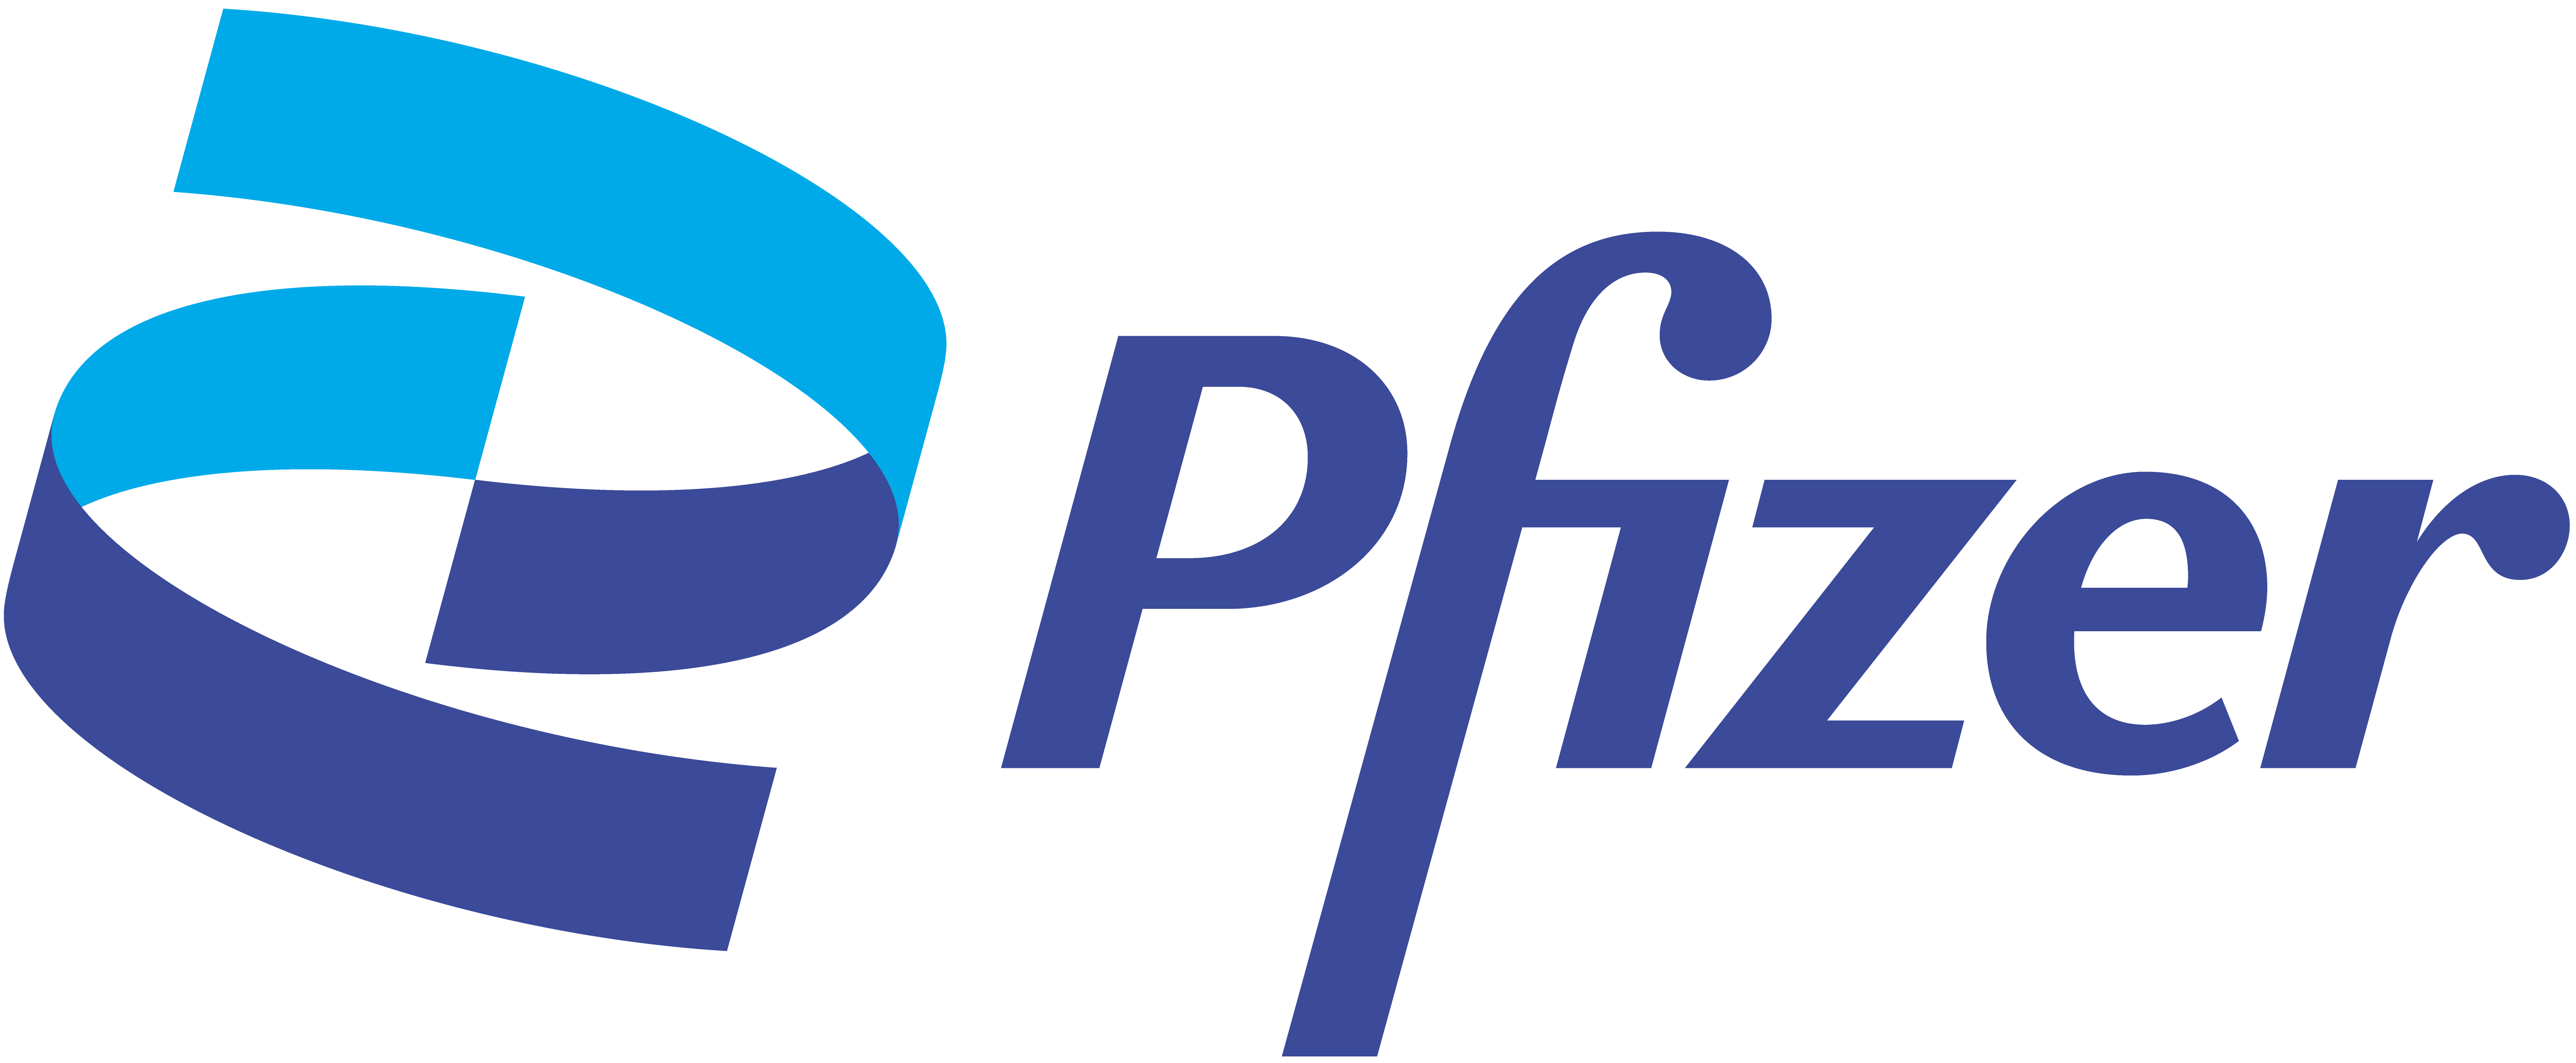 Pfizer_Logo_Color_CMYK